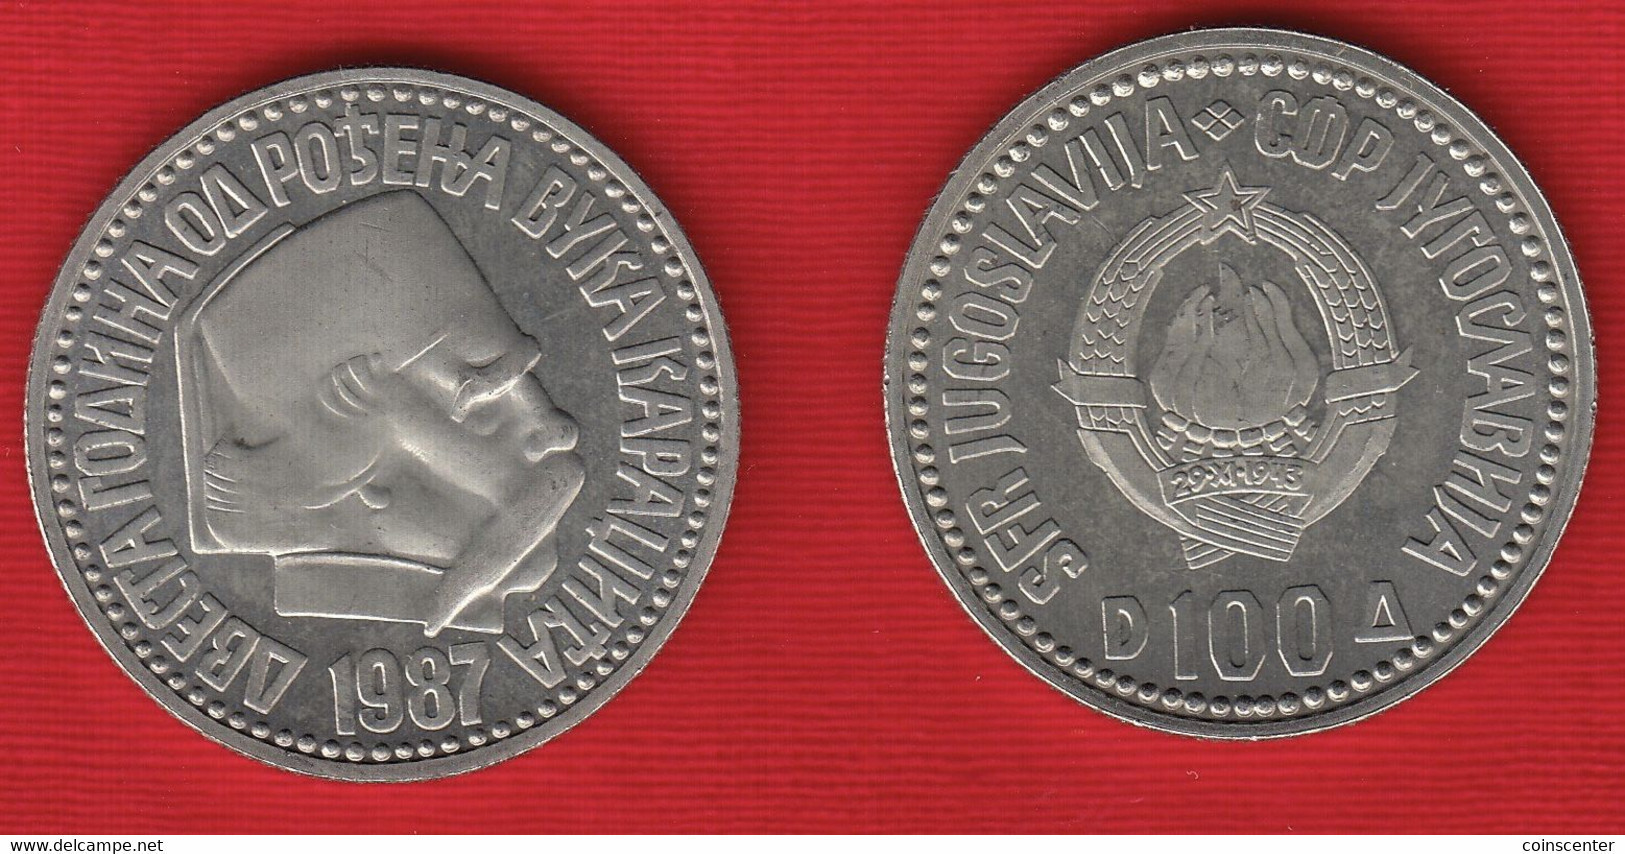 Yugoslavia 100 Dinara 1987 Km#127 "Birth Of Vuk Karadzic" UNC - Joegoslavië